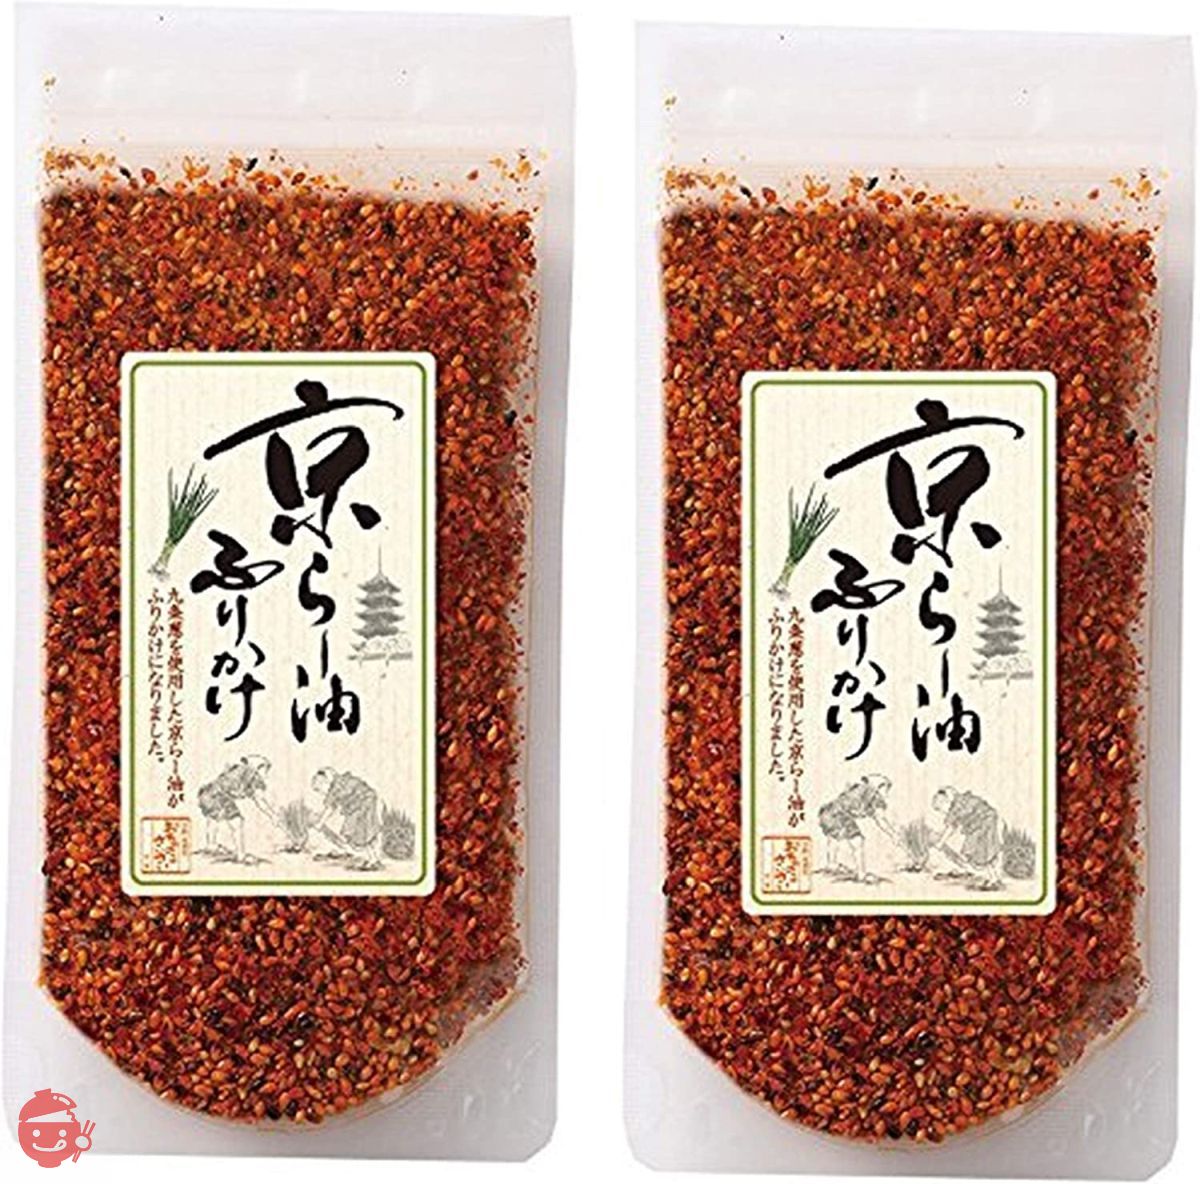 Maiko Hanhii Kyora oil furikake 1 bag (80g) (2 pieces) – Japacle